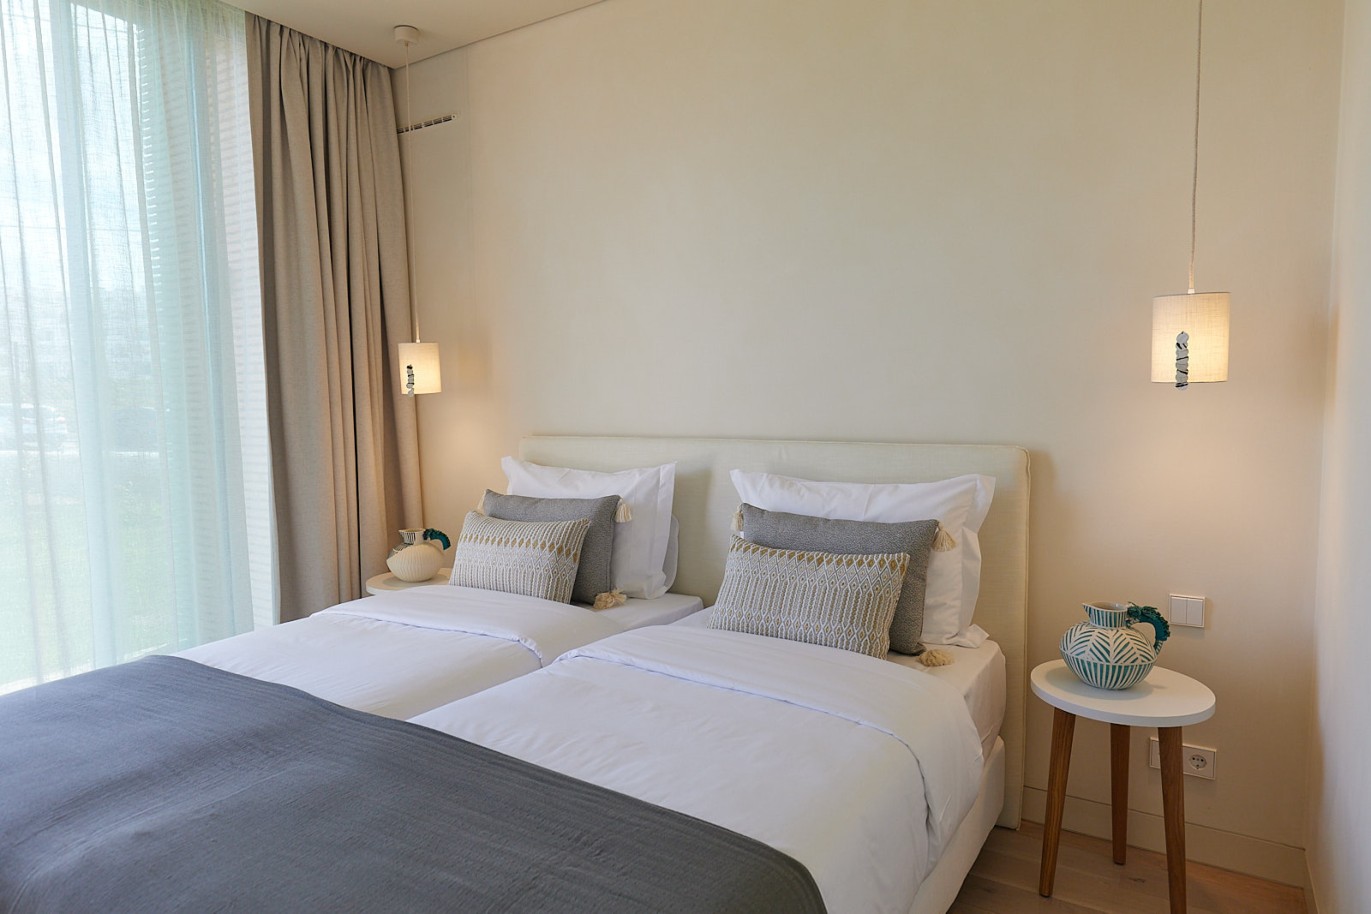 2 bedroom apartment in resort, for sale in Porches, Algarve_229229